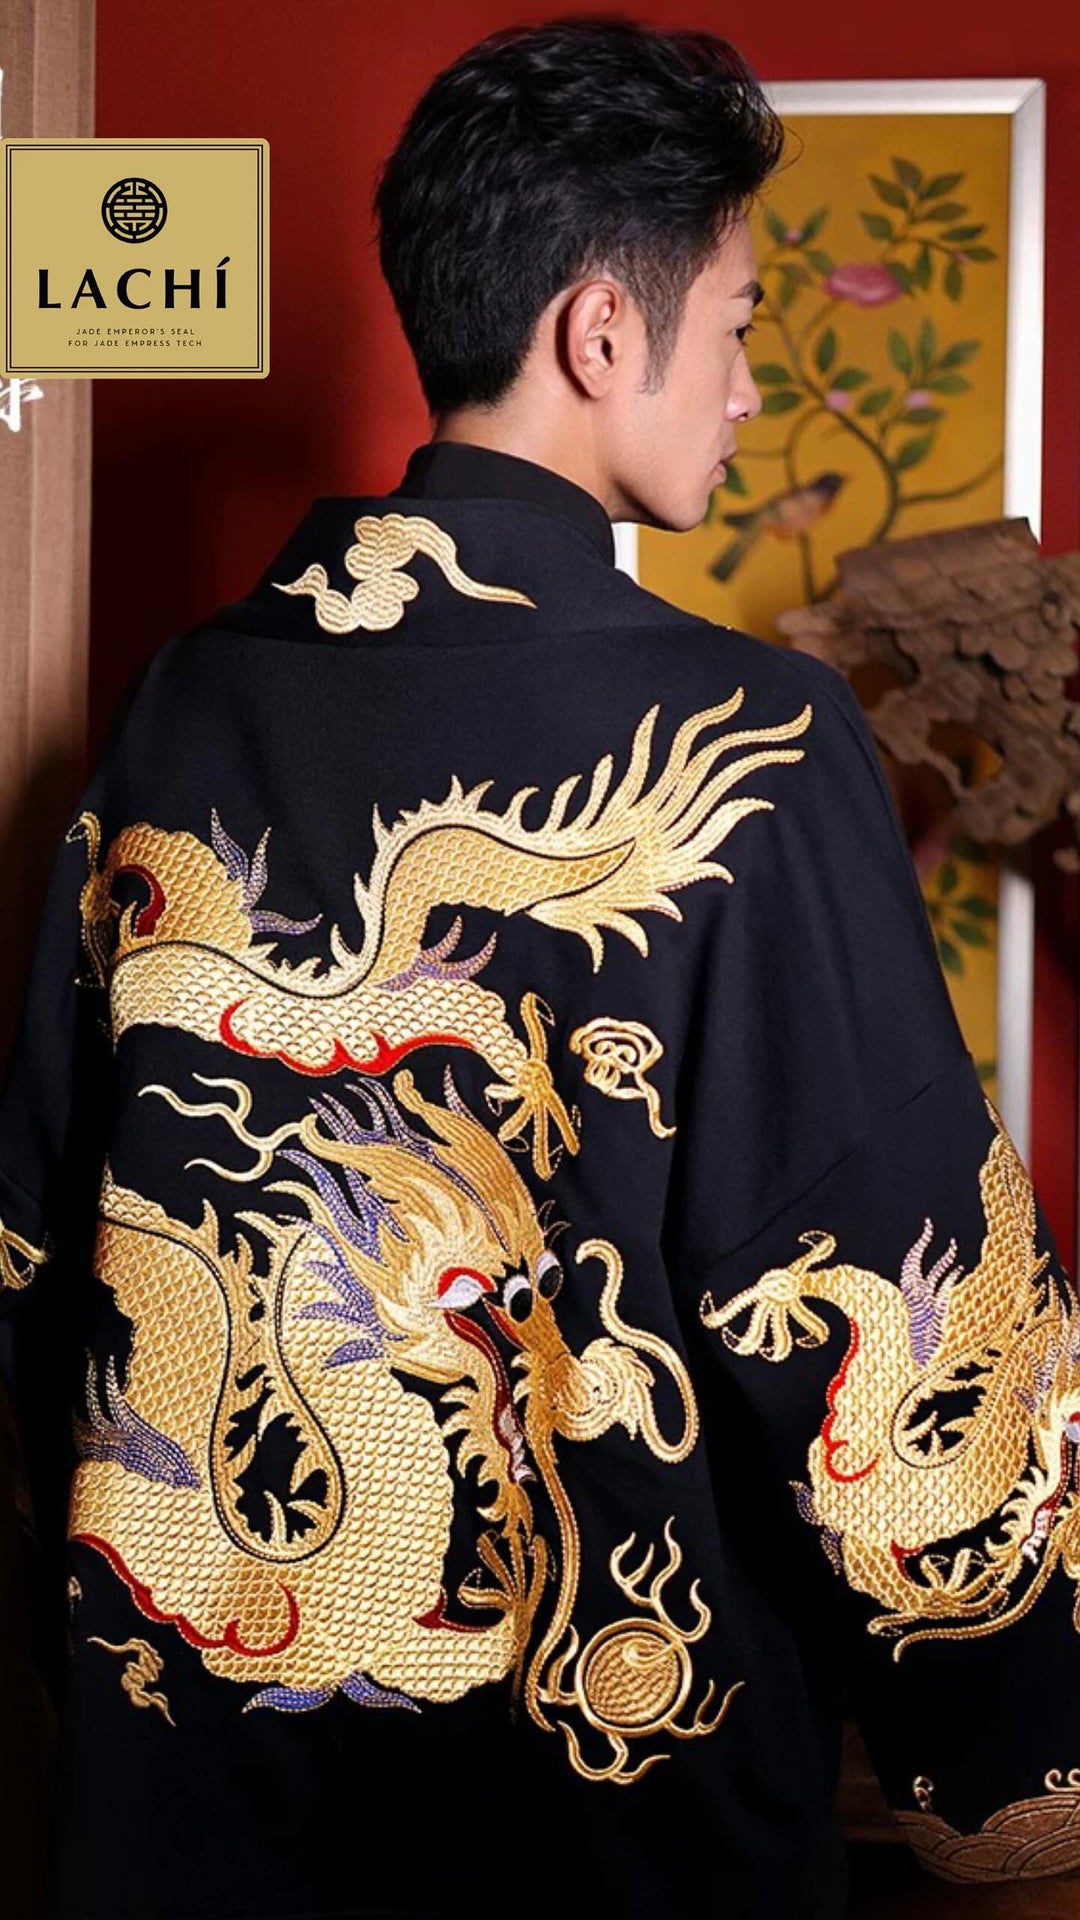 Tao Double Tech™ • Yang • Tao Golden Dragon Kimono Coat • Golden Ratio Tailoring • Thermal Double-Layer • High Vibrational Art • Handmade Dragon Embroidery